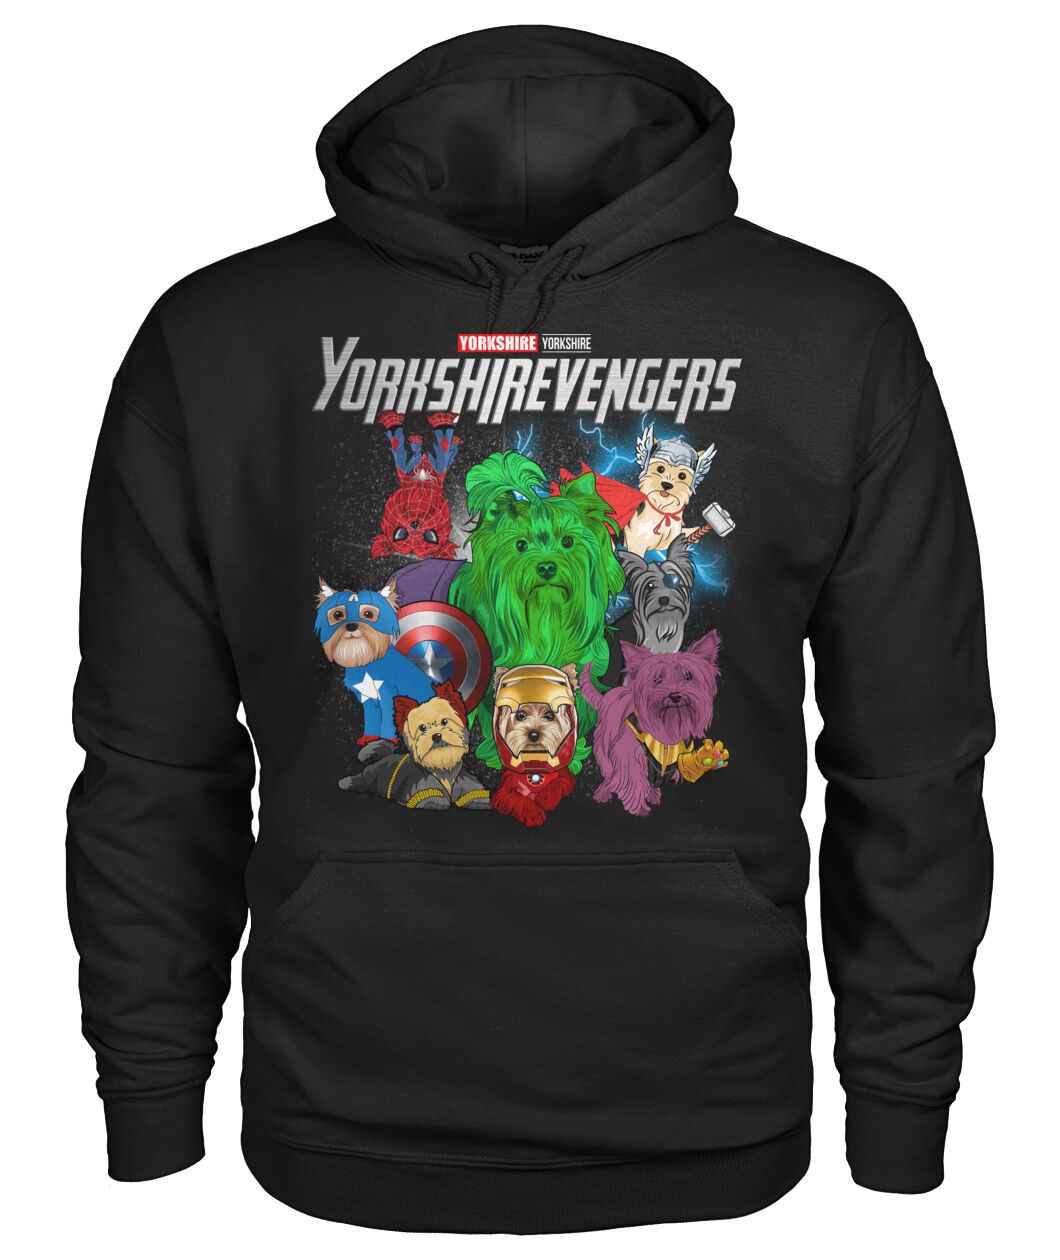 Yorkshirevengers 3D Hoodie, Shirt 8